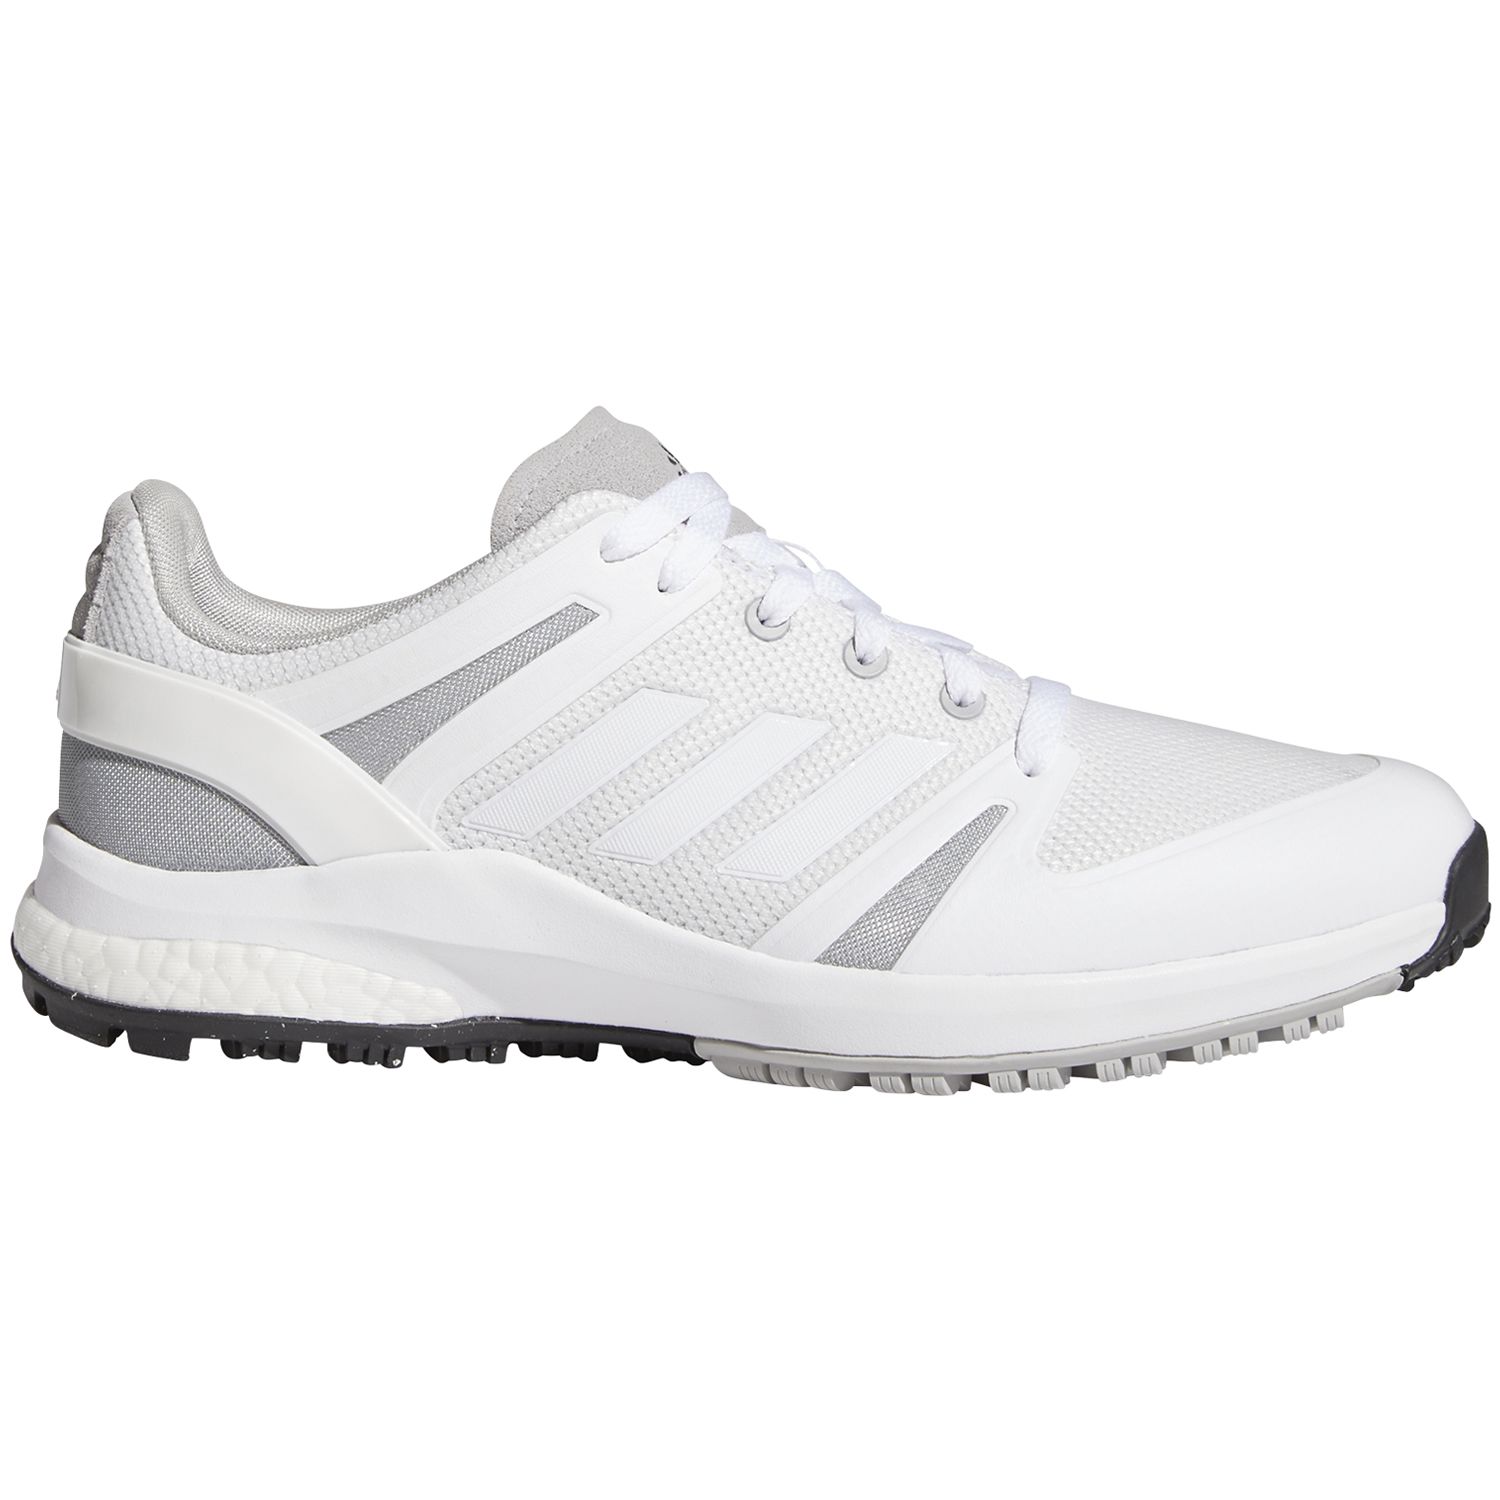 adidas EQT SL Golf Shoes White/Grey Two | Scottsdale Golf